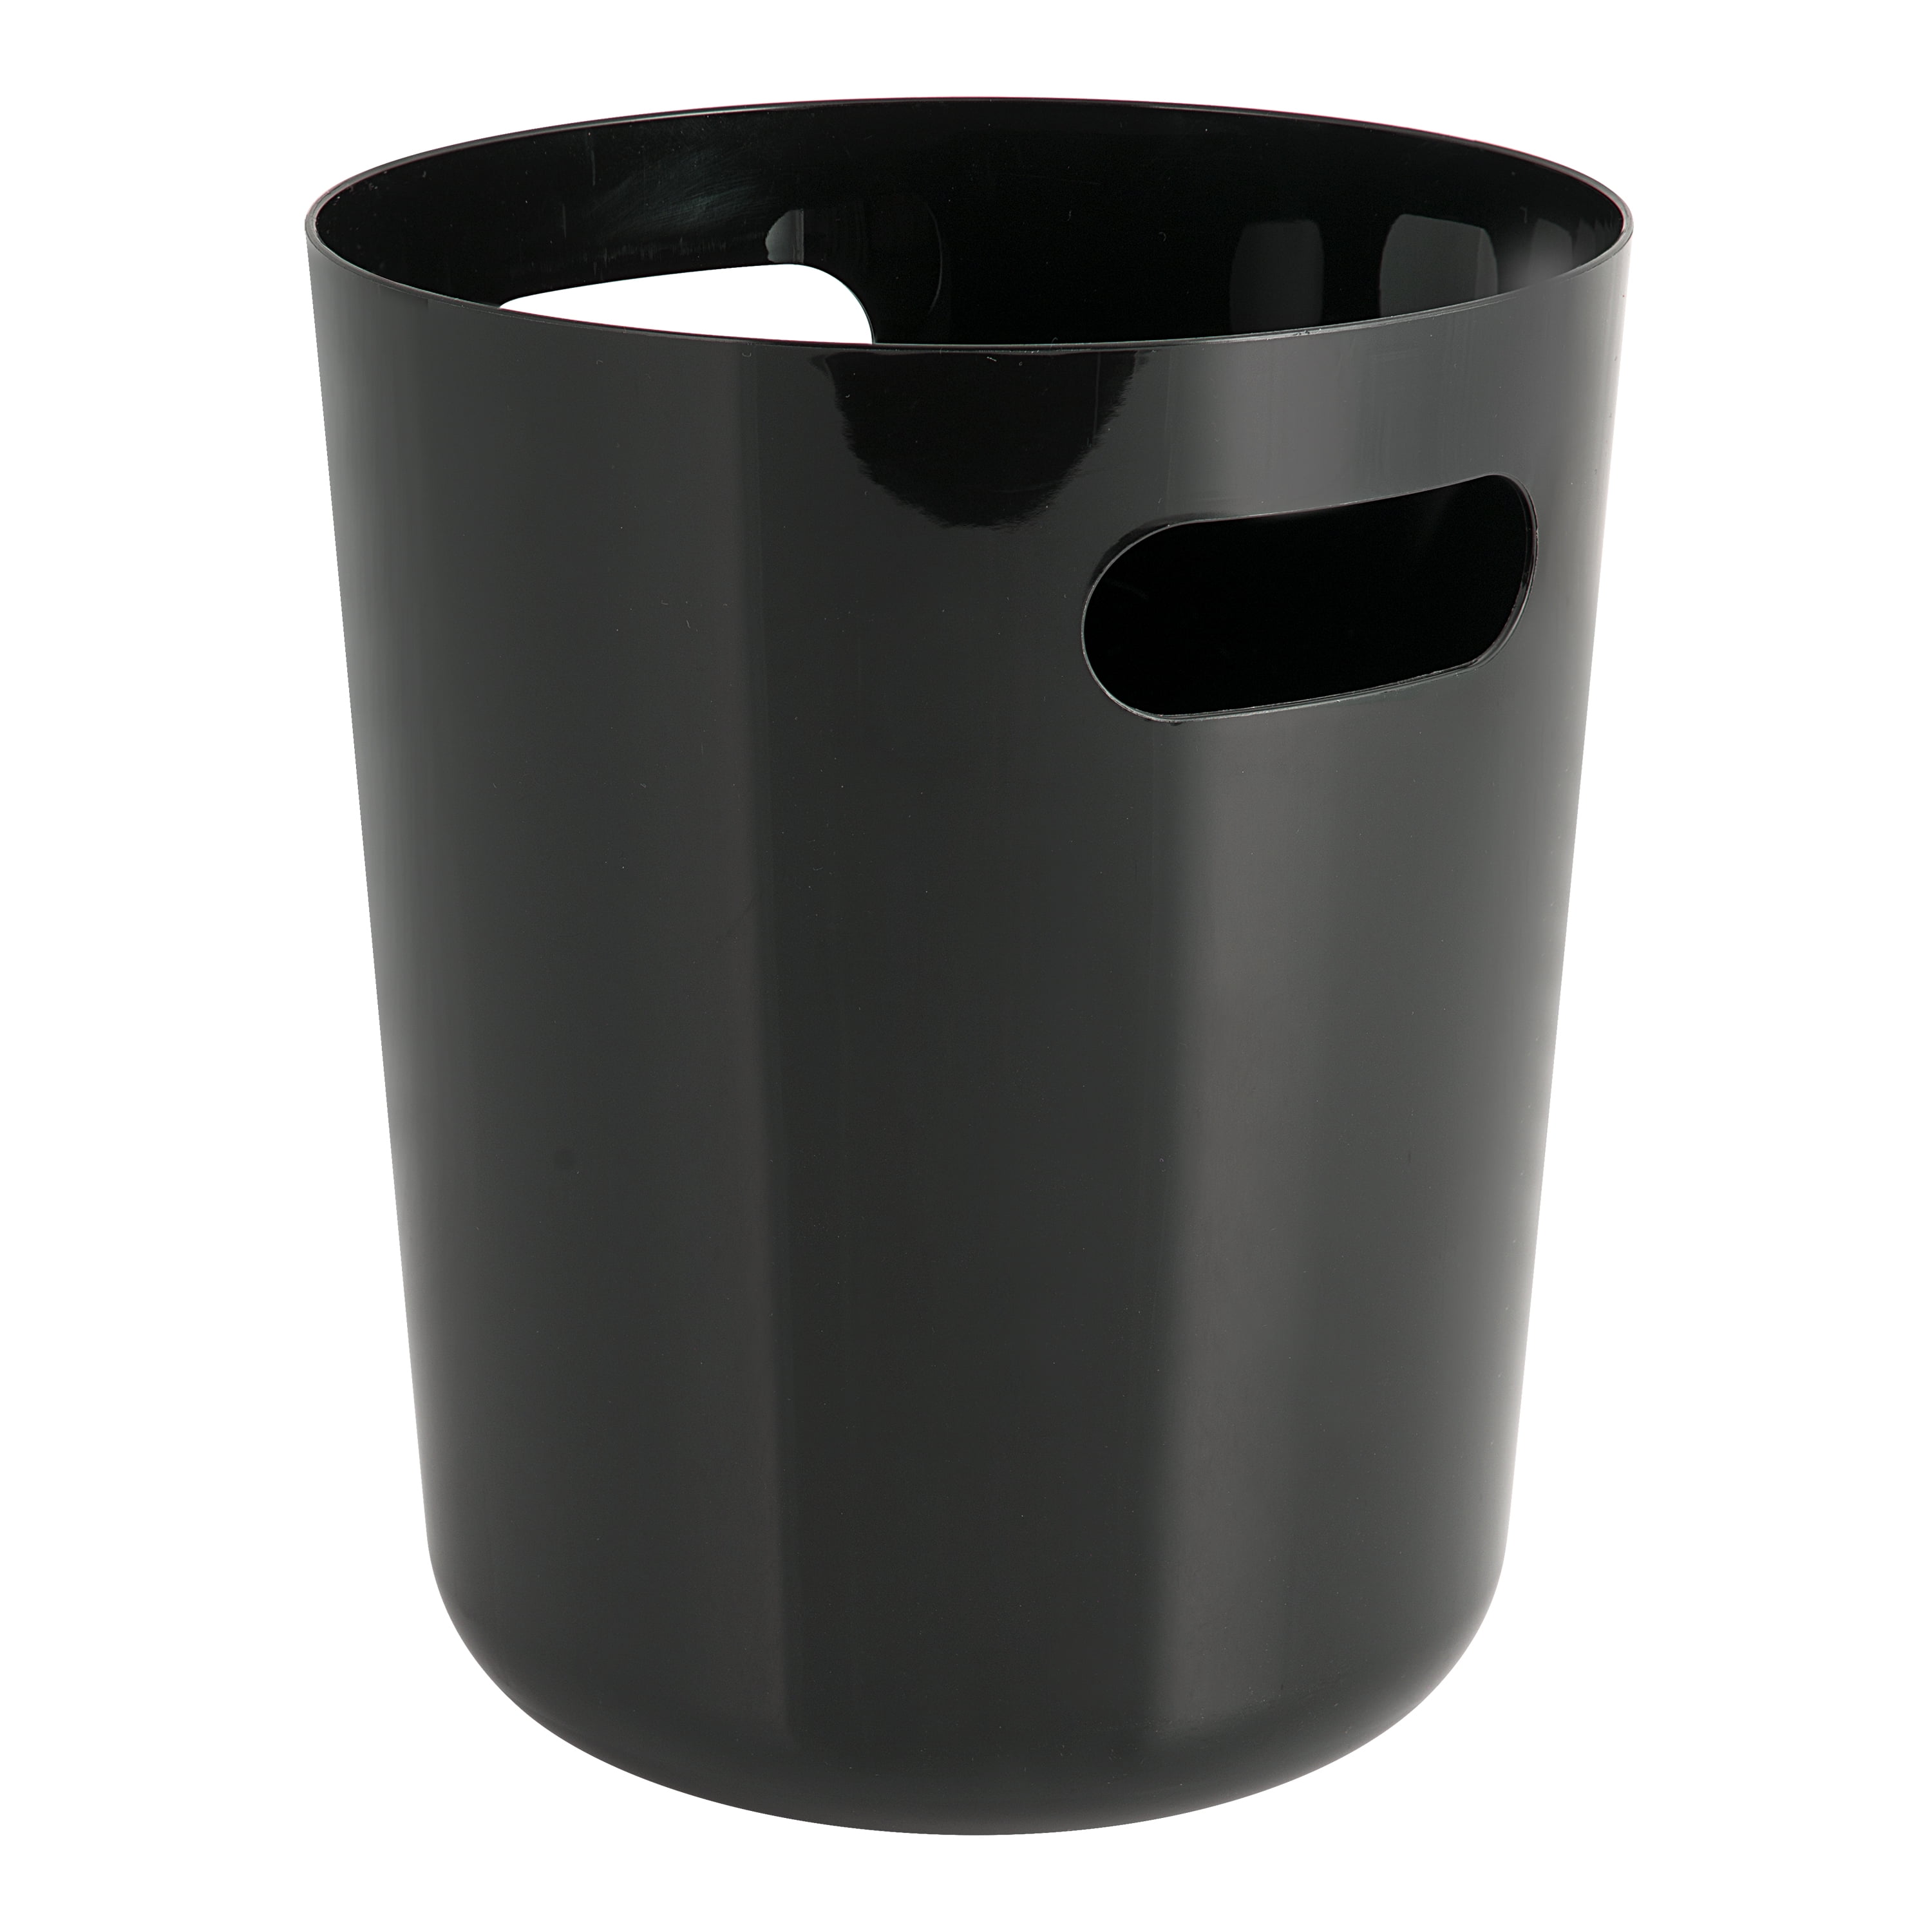 Mainstays Basic Plastic 1.45 Gallon Wastebasket in Rich Black for Bathroom, Bedroom or Office